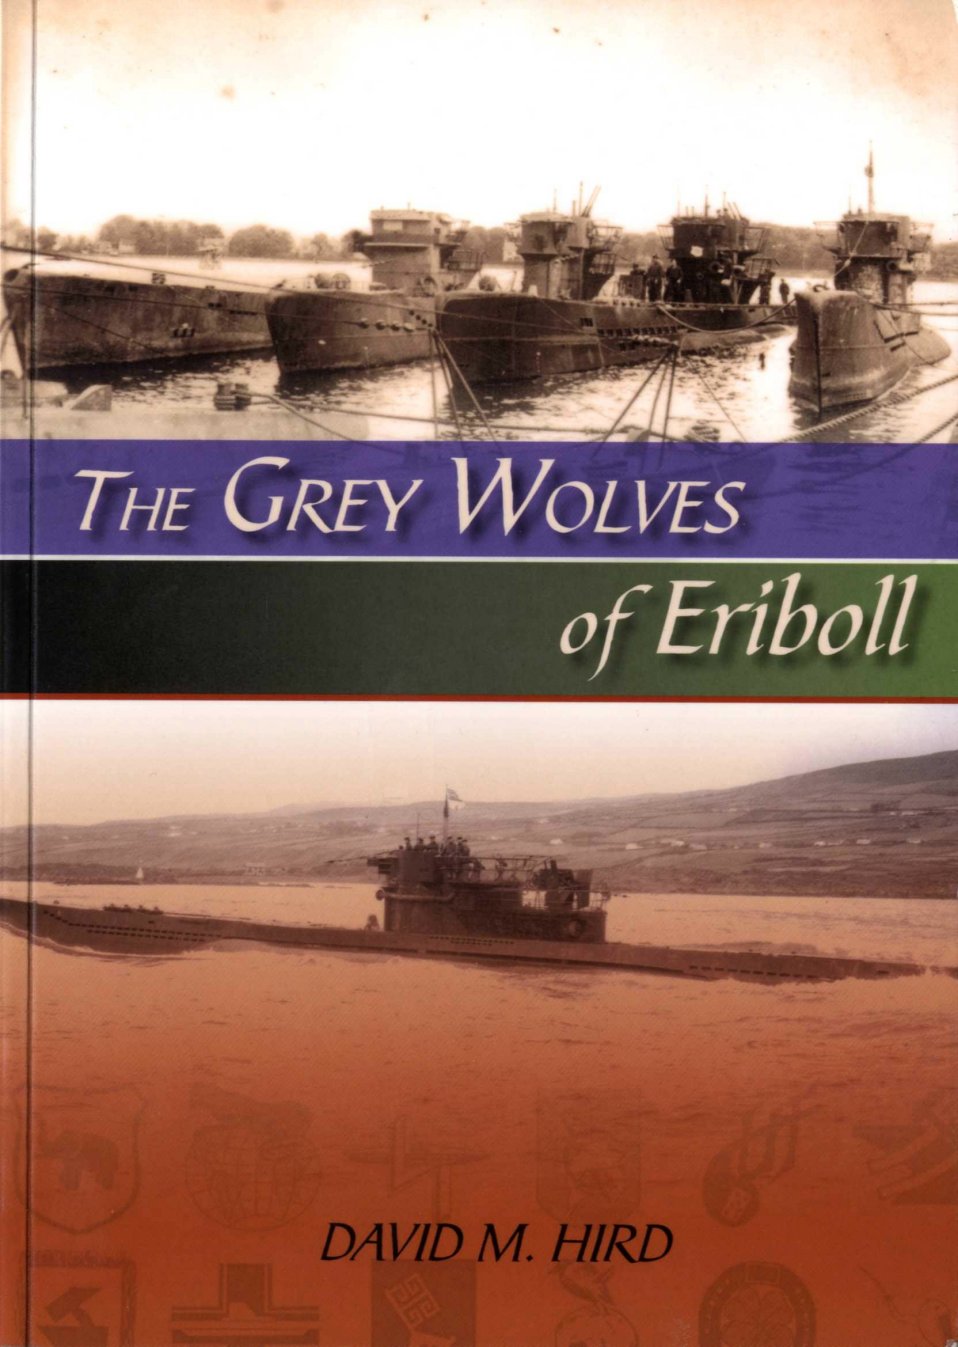 World War II3 - David M. Hird - The Grey Wolves of Eriboll 2010.jpg